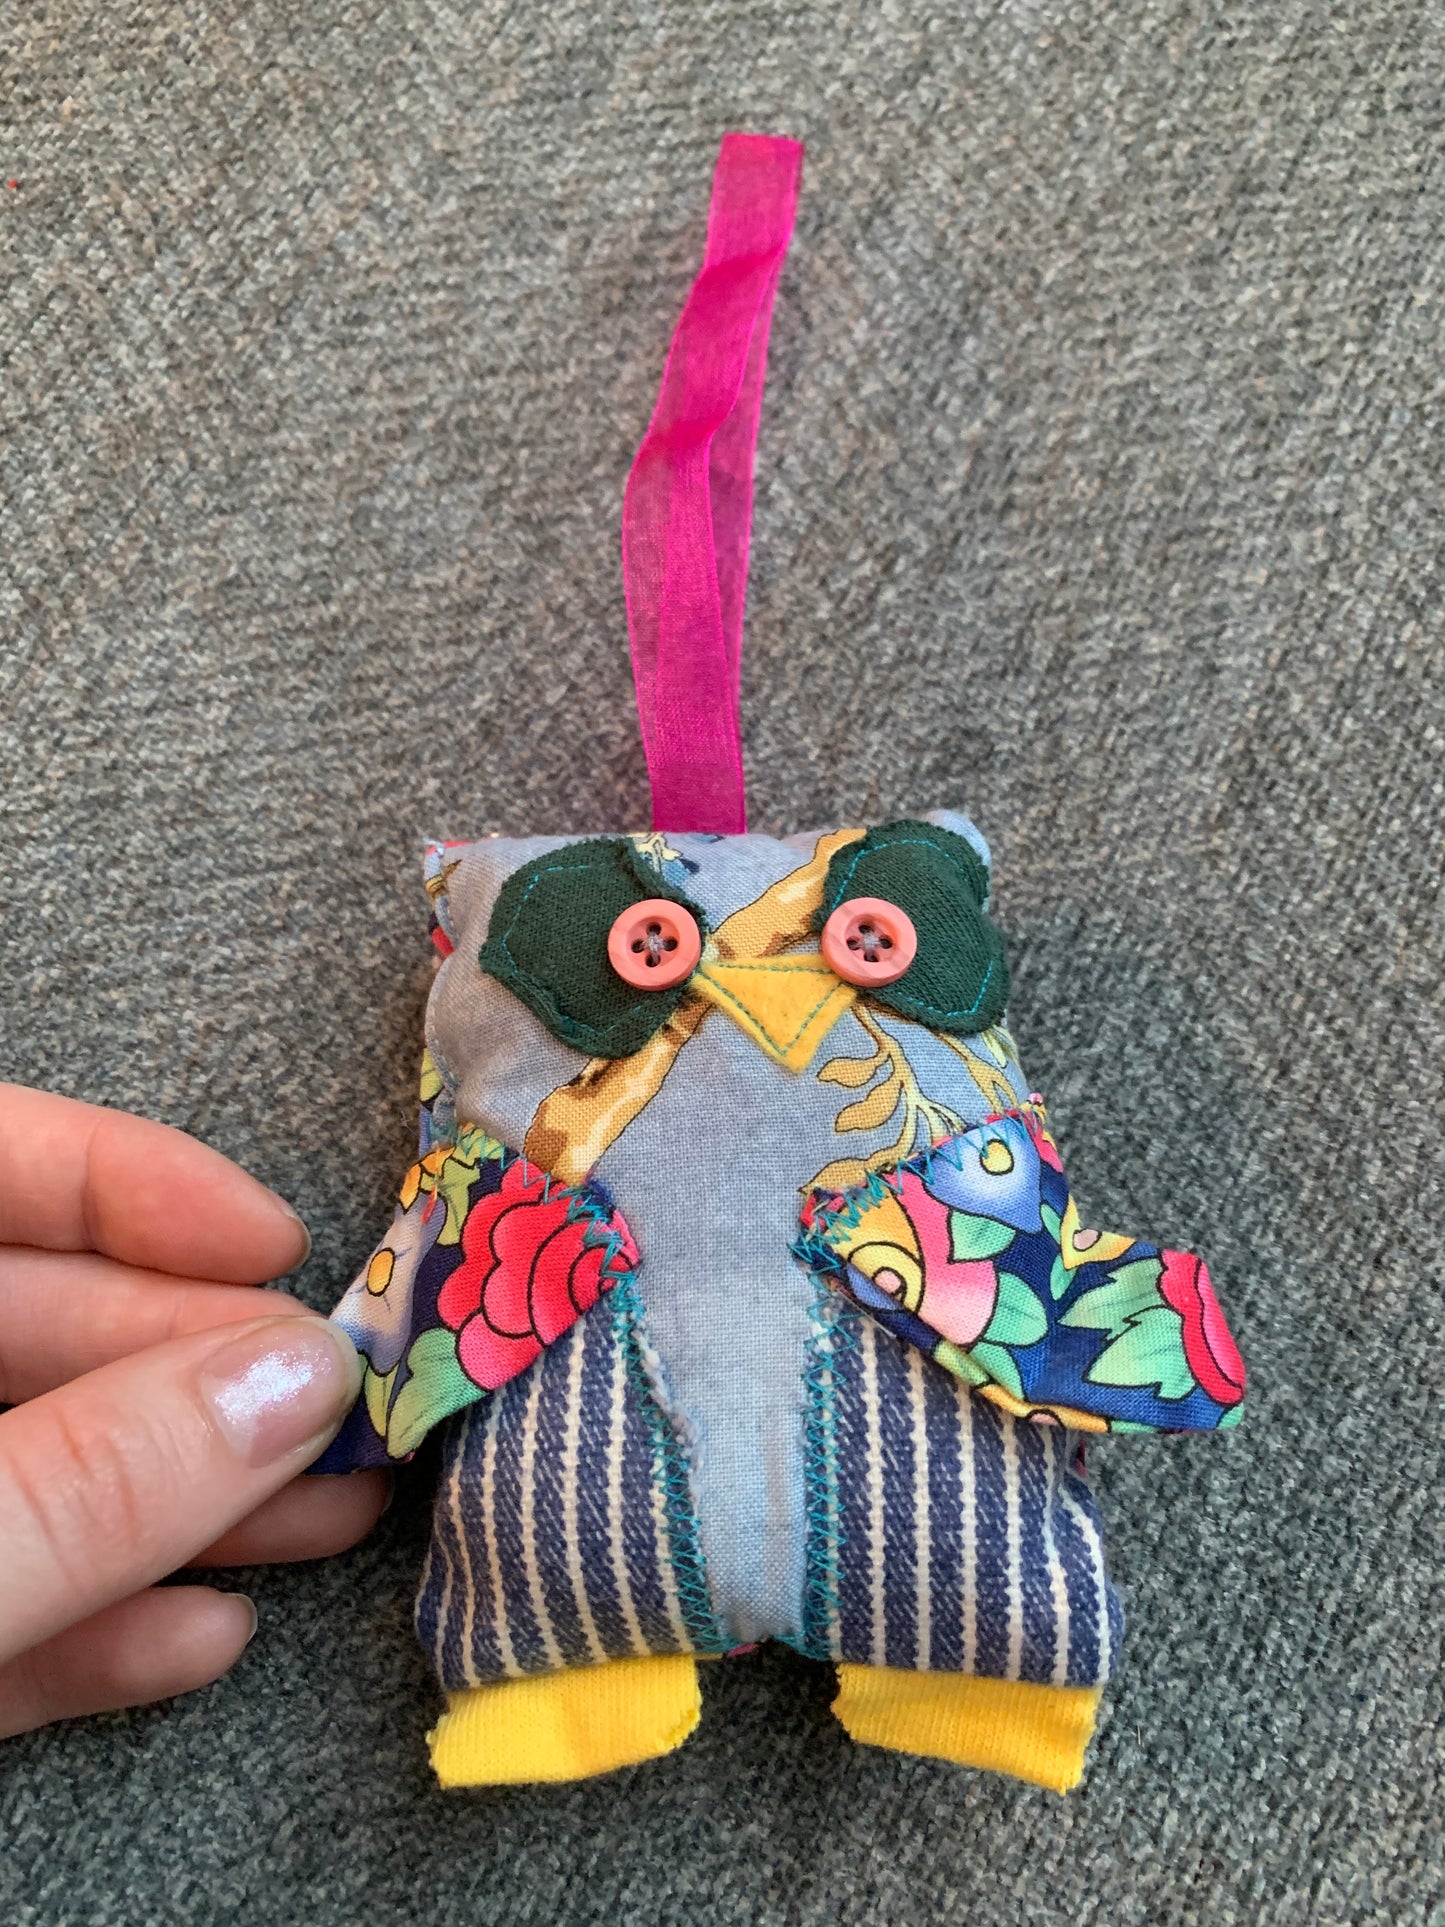 Mini Animal Friend - Owl - Keychain, Ornament, Backpack Charm